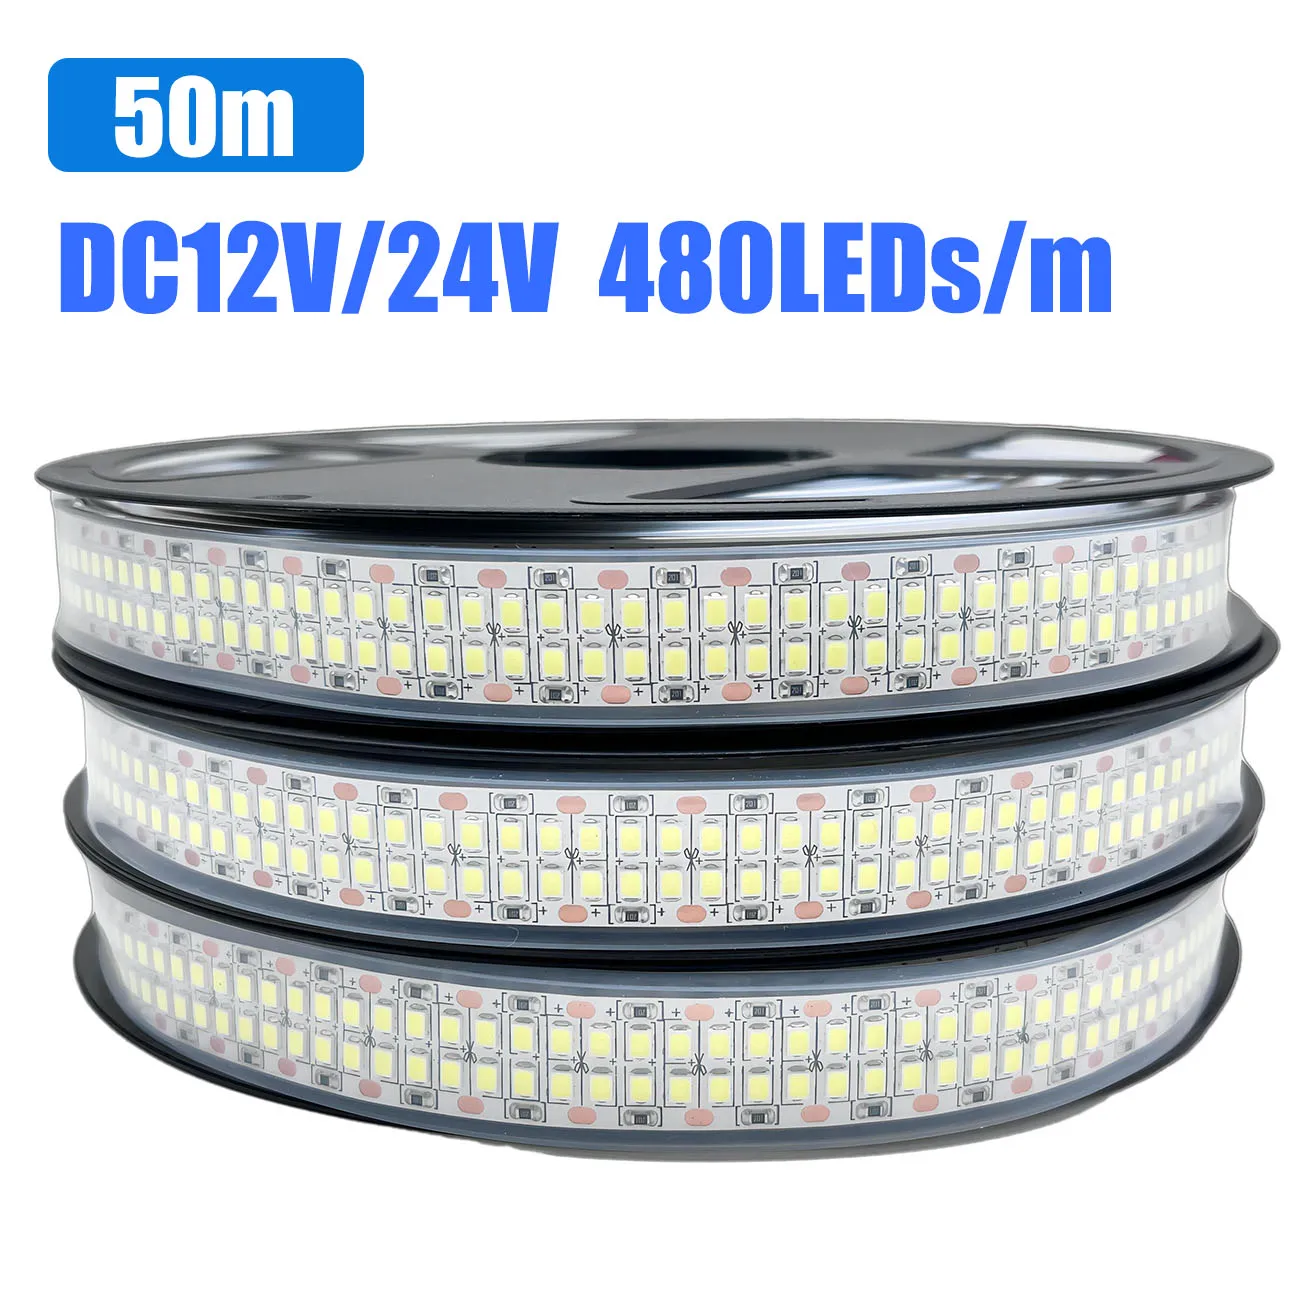 

50M 2835 High Density Double Row 480Leds LED Strip Light DC12V/24V Ultra Bright IP67 Waterproof Led Tape outdoor lighting decor